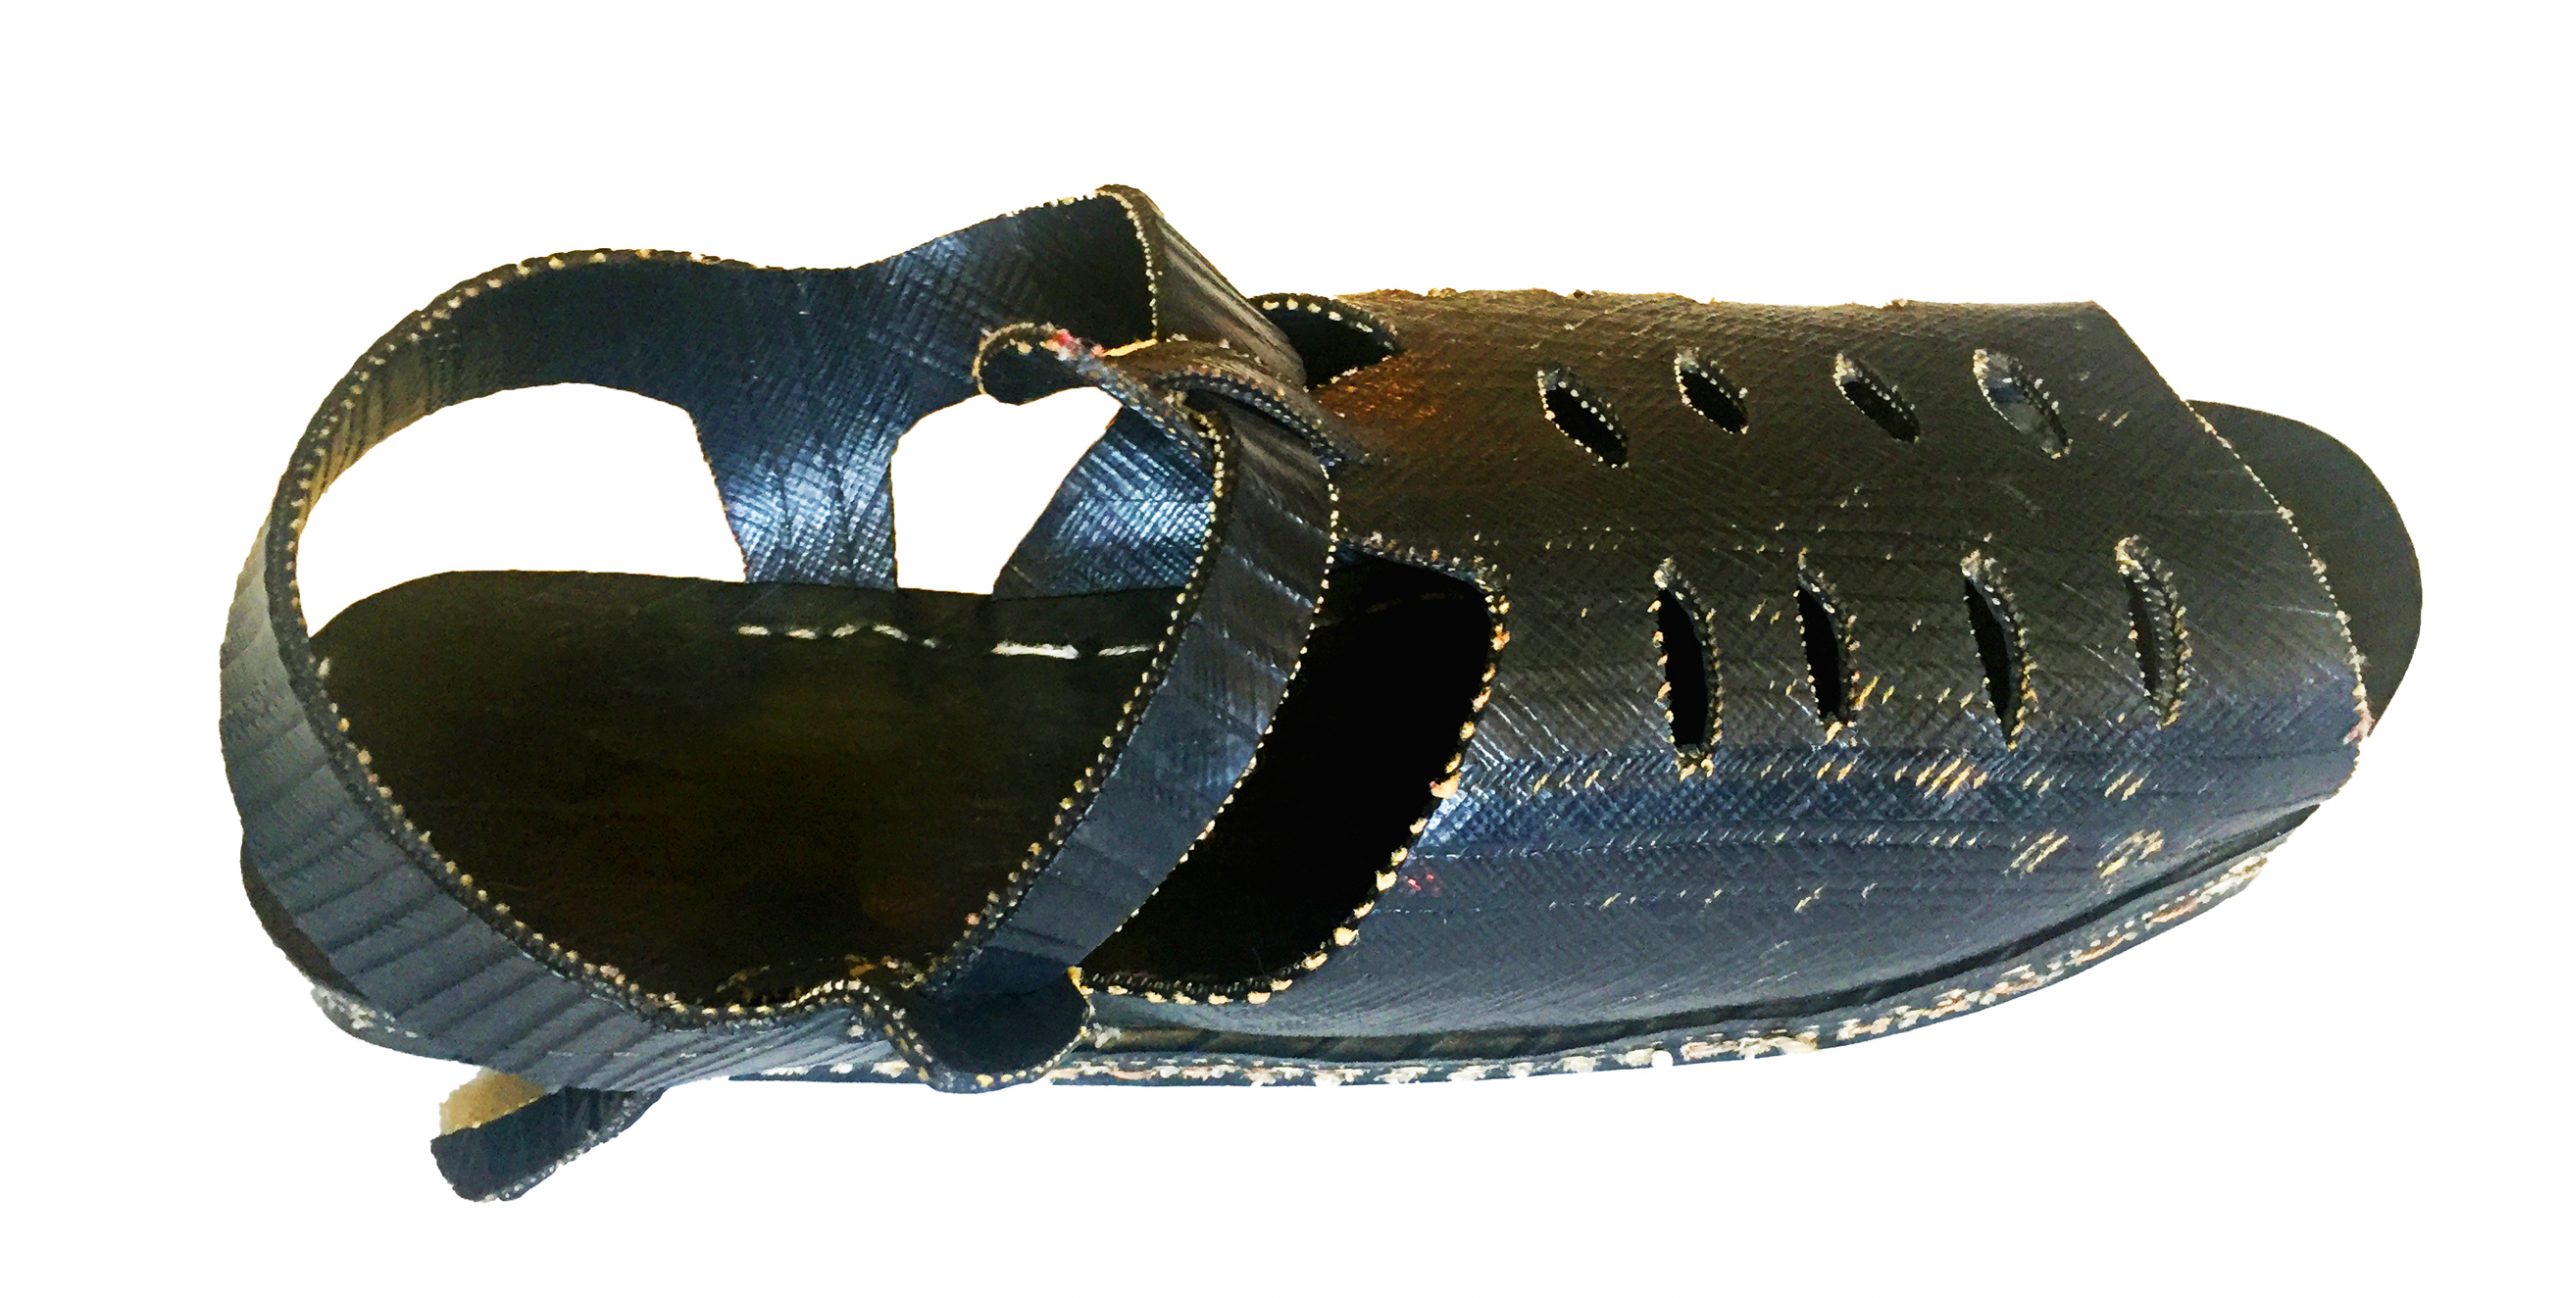 Sandals from Zimbabwe